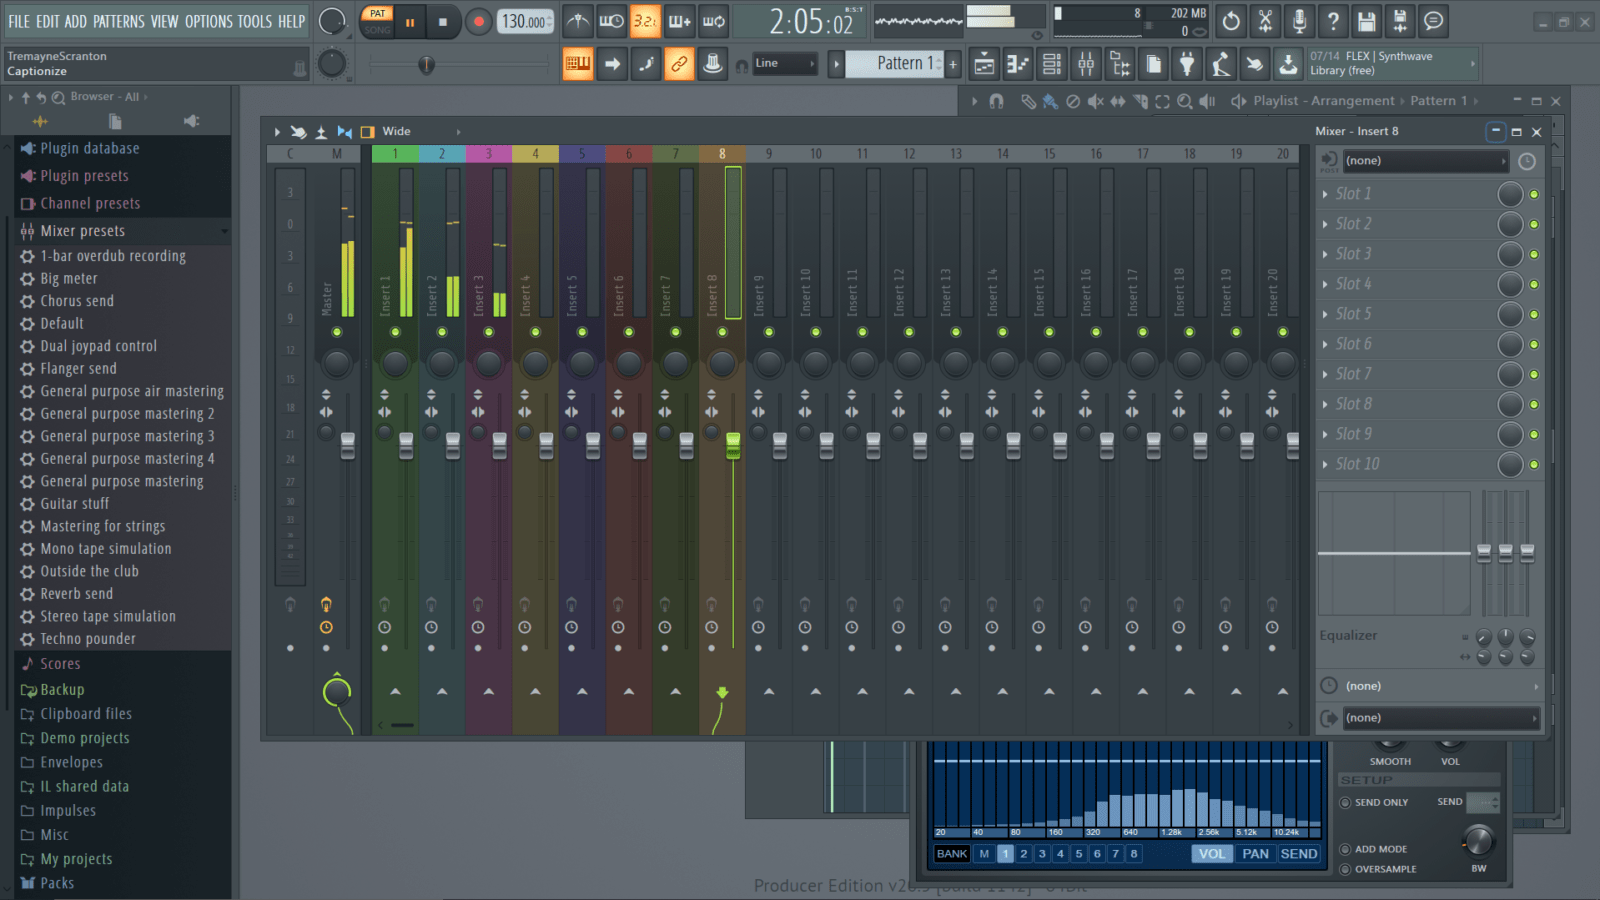 mastering fl studio 12